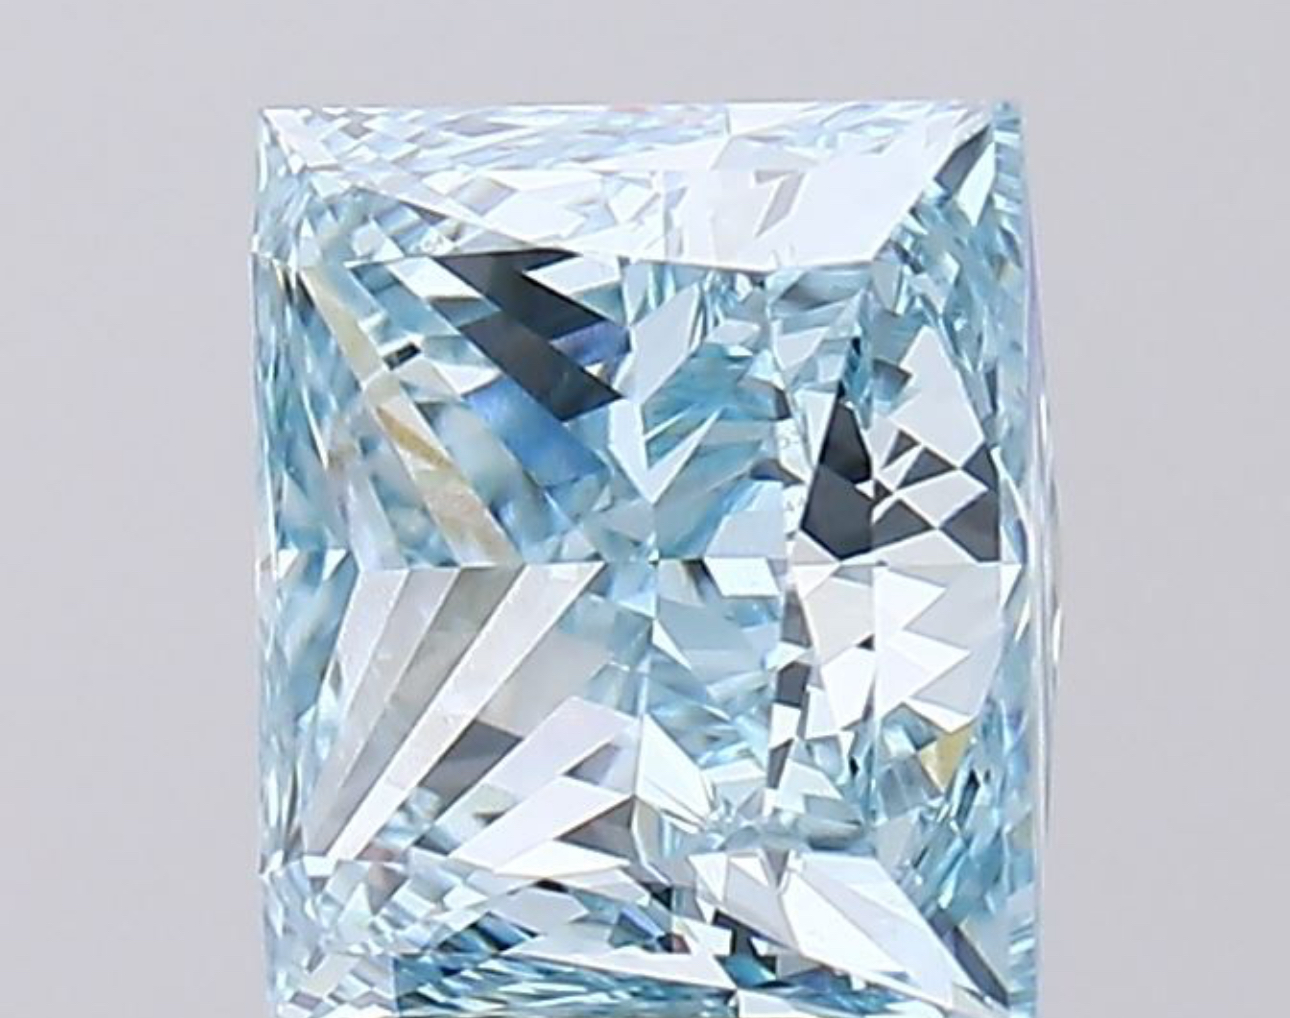 ** ON SALE ** Princess Cut Diamond 5.01 Carat Fancy Intense Blue VS1 Clarity EX EX - IGI - Image 7 of 8